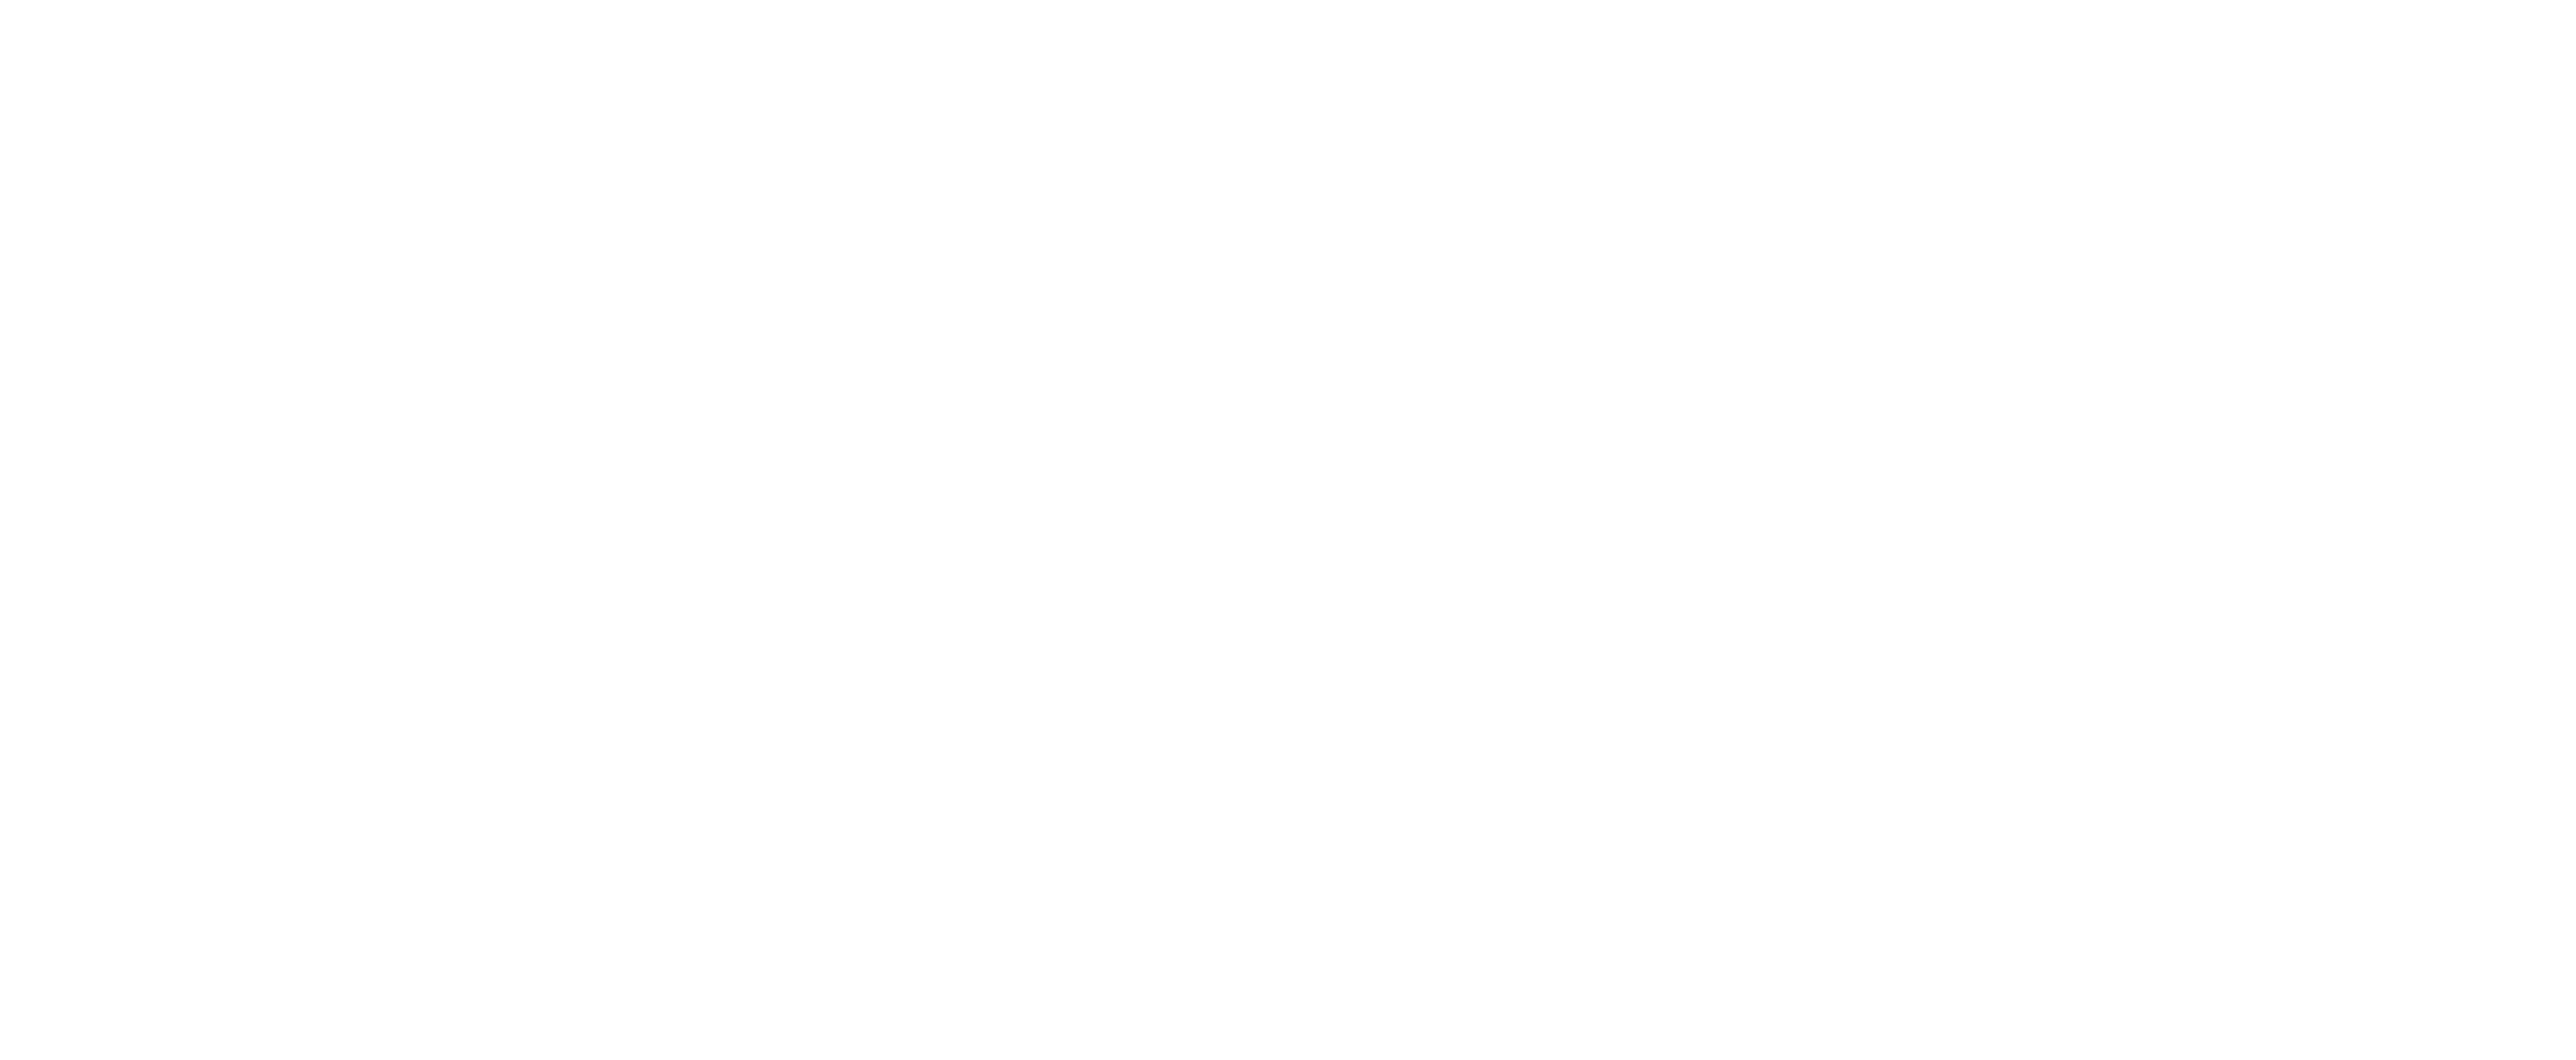 ADEPT barista academy